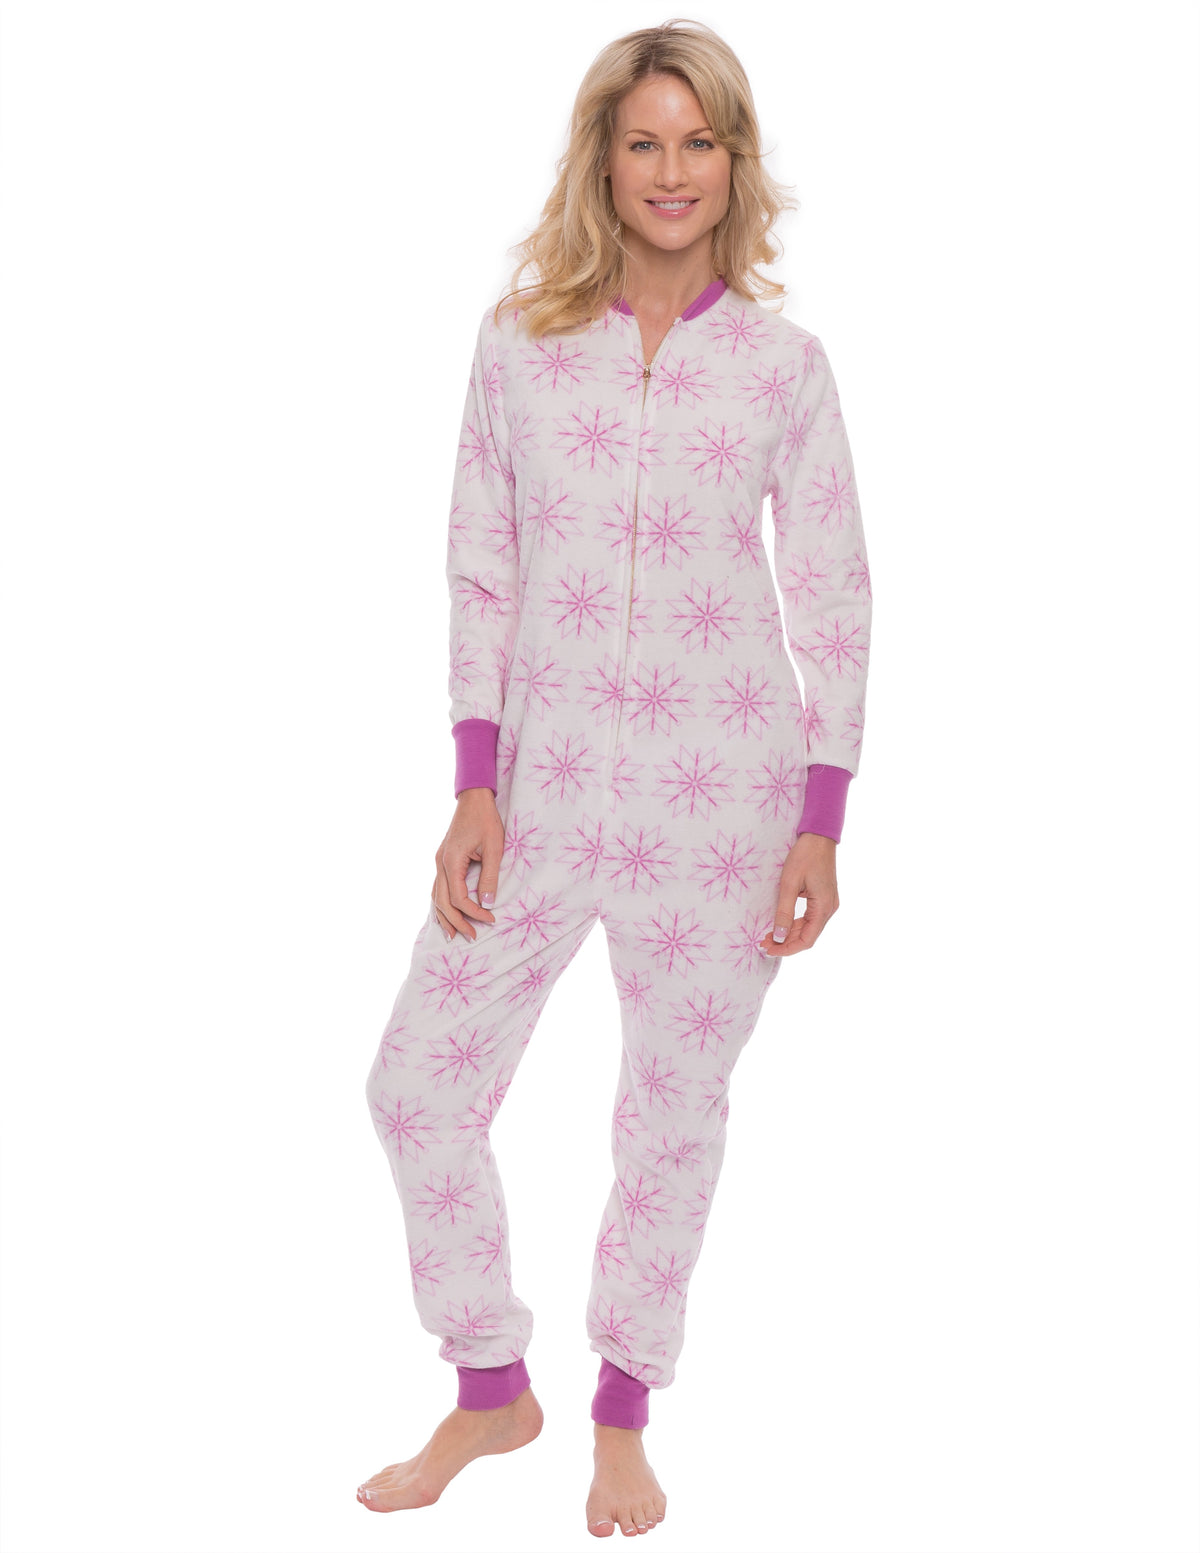 Women's Premium Microfleece Onesie Jumper Pajama - Snowflakes White/Purple